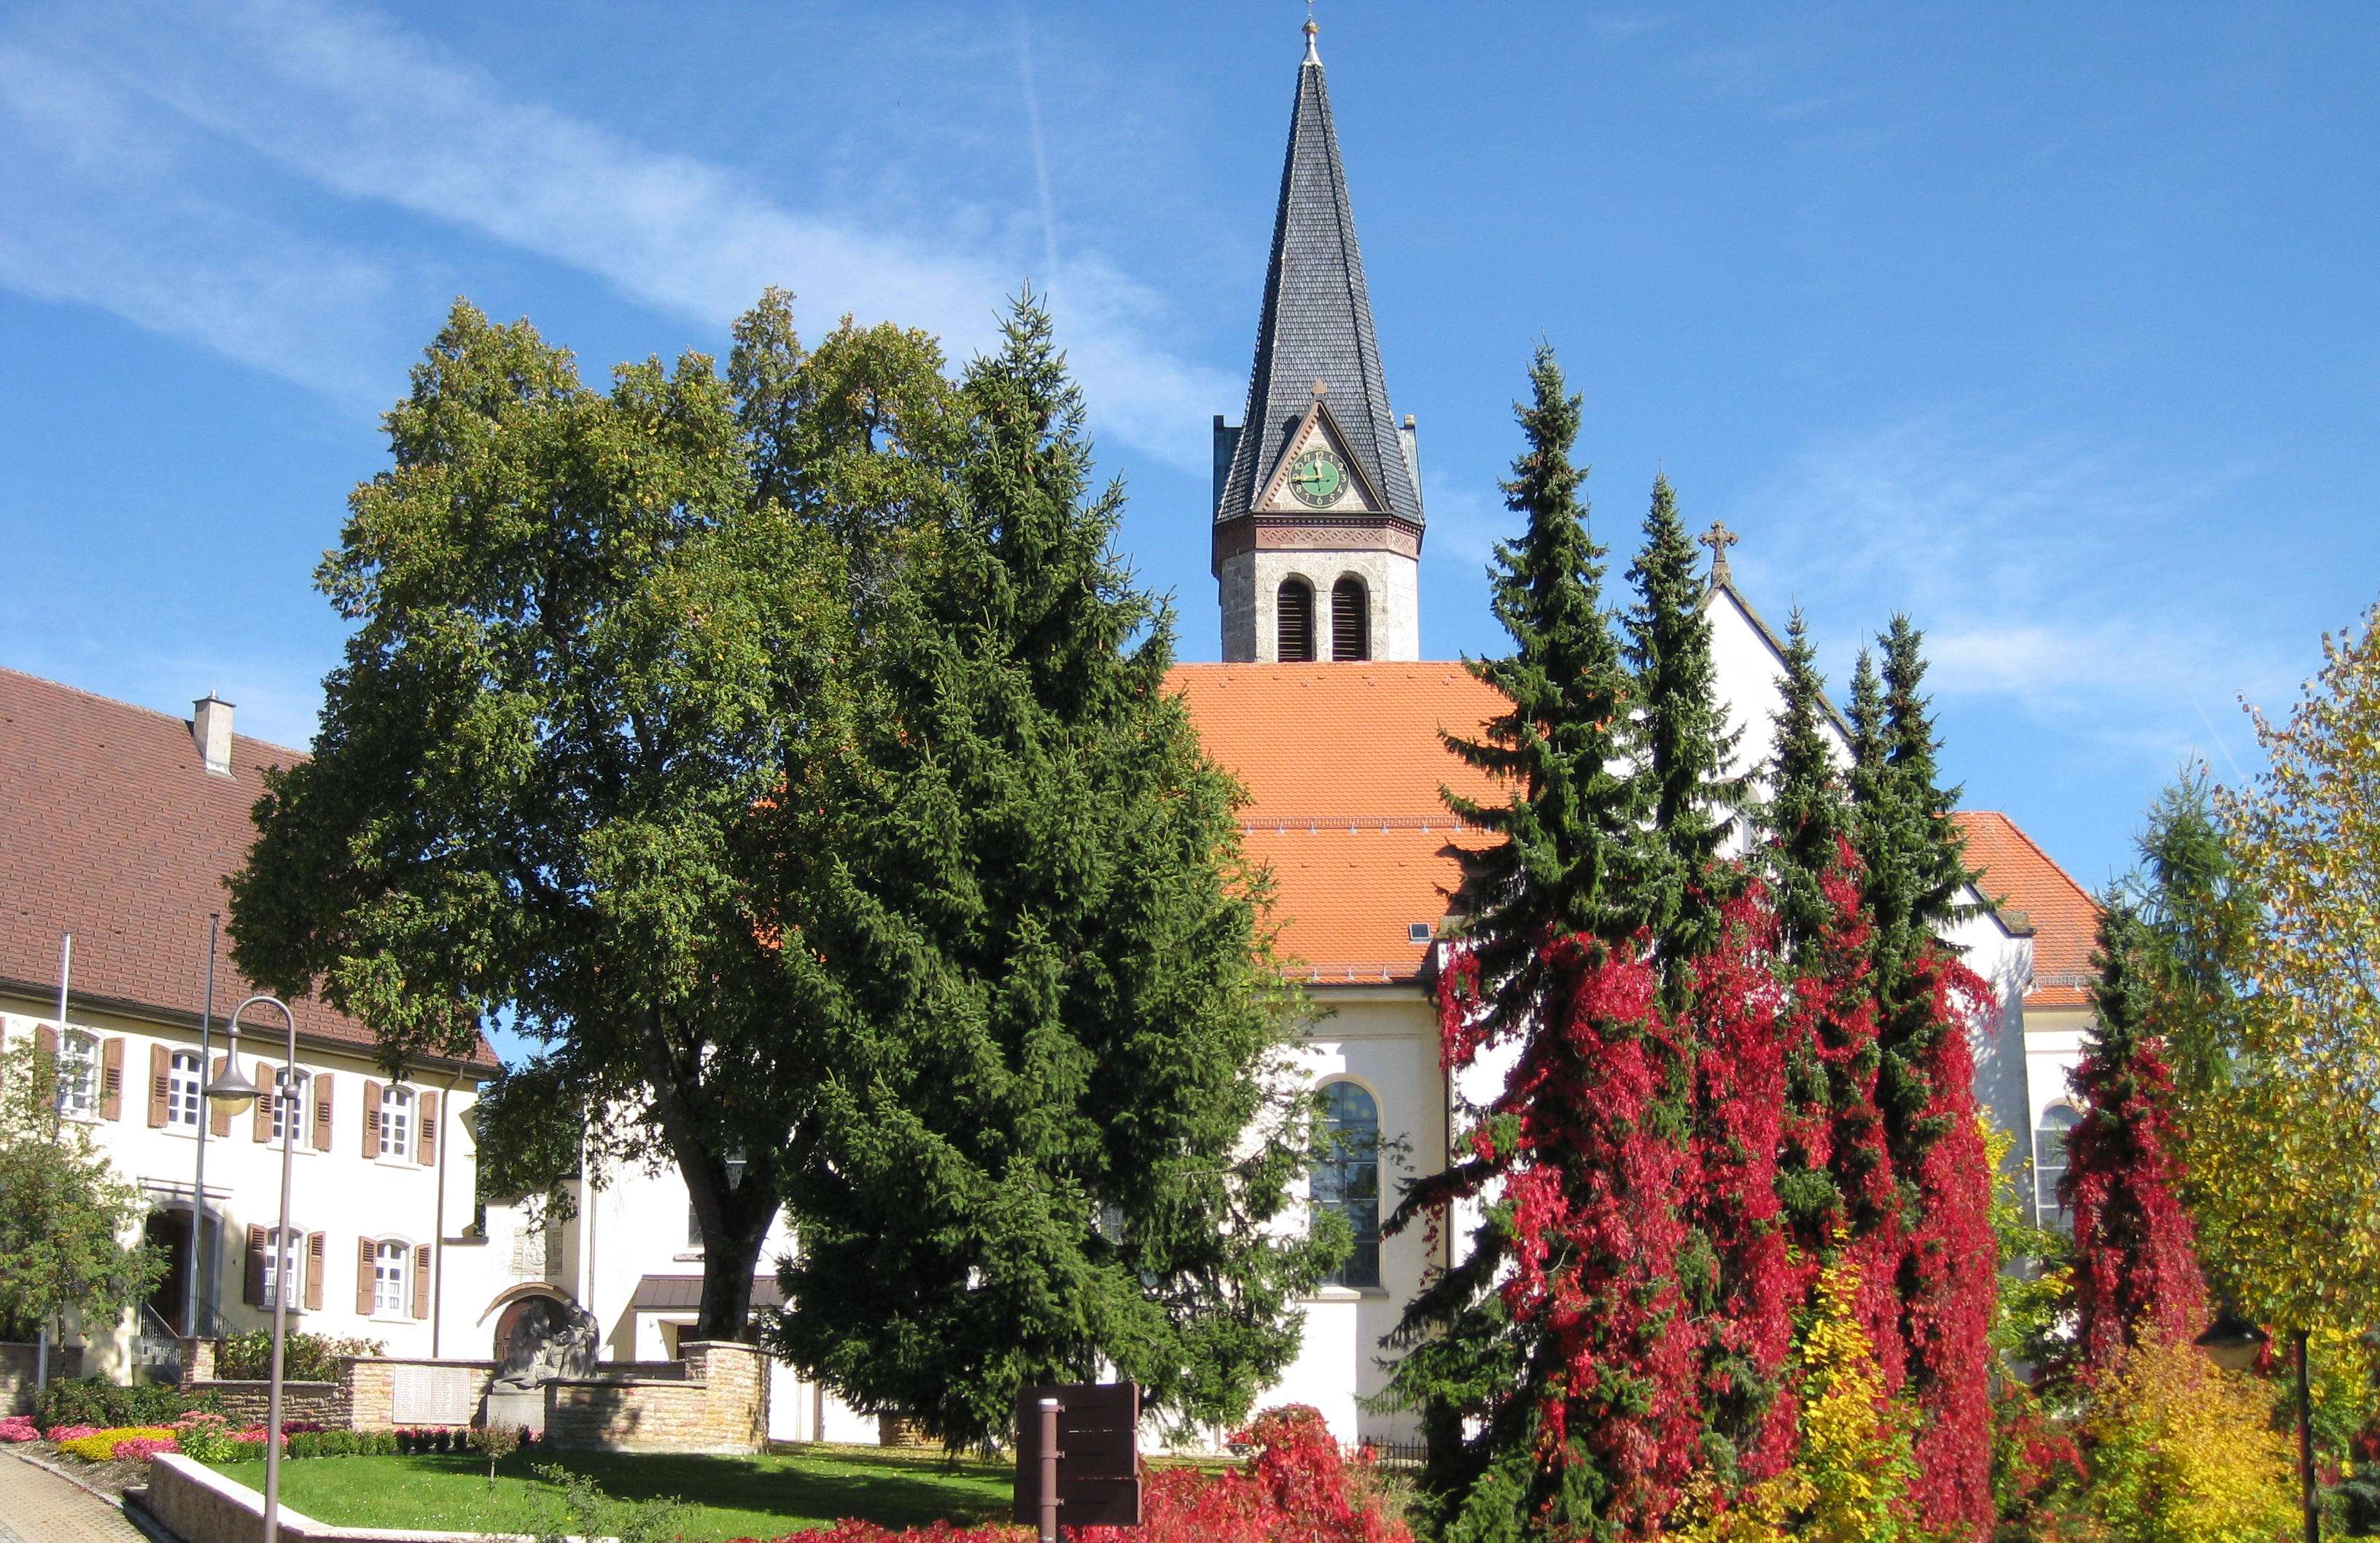  Katholische Kirche St. Afra Obernheim 